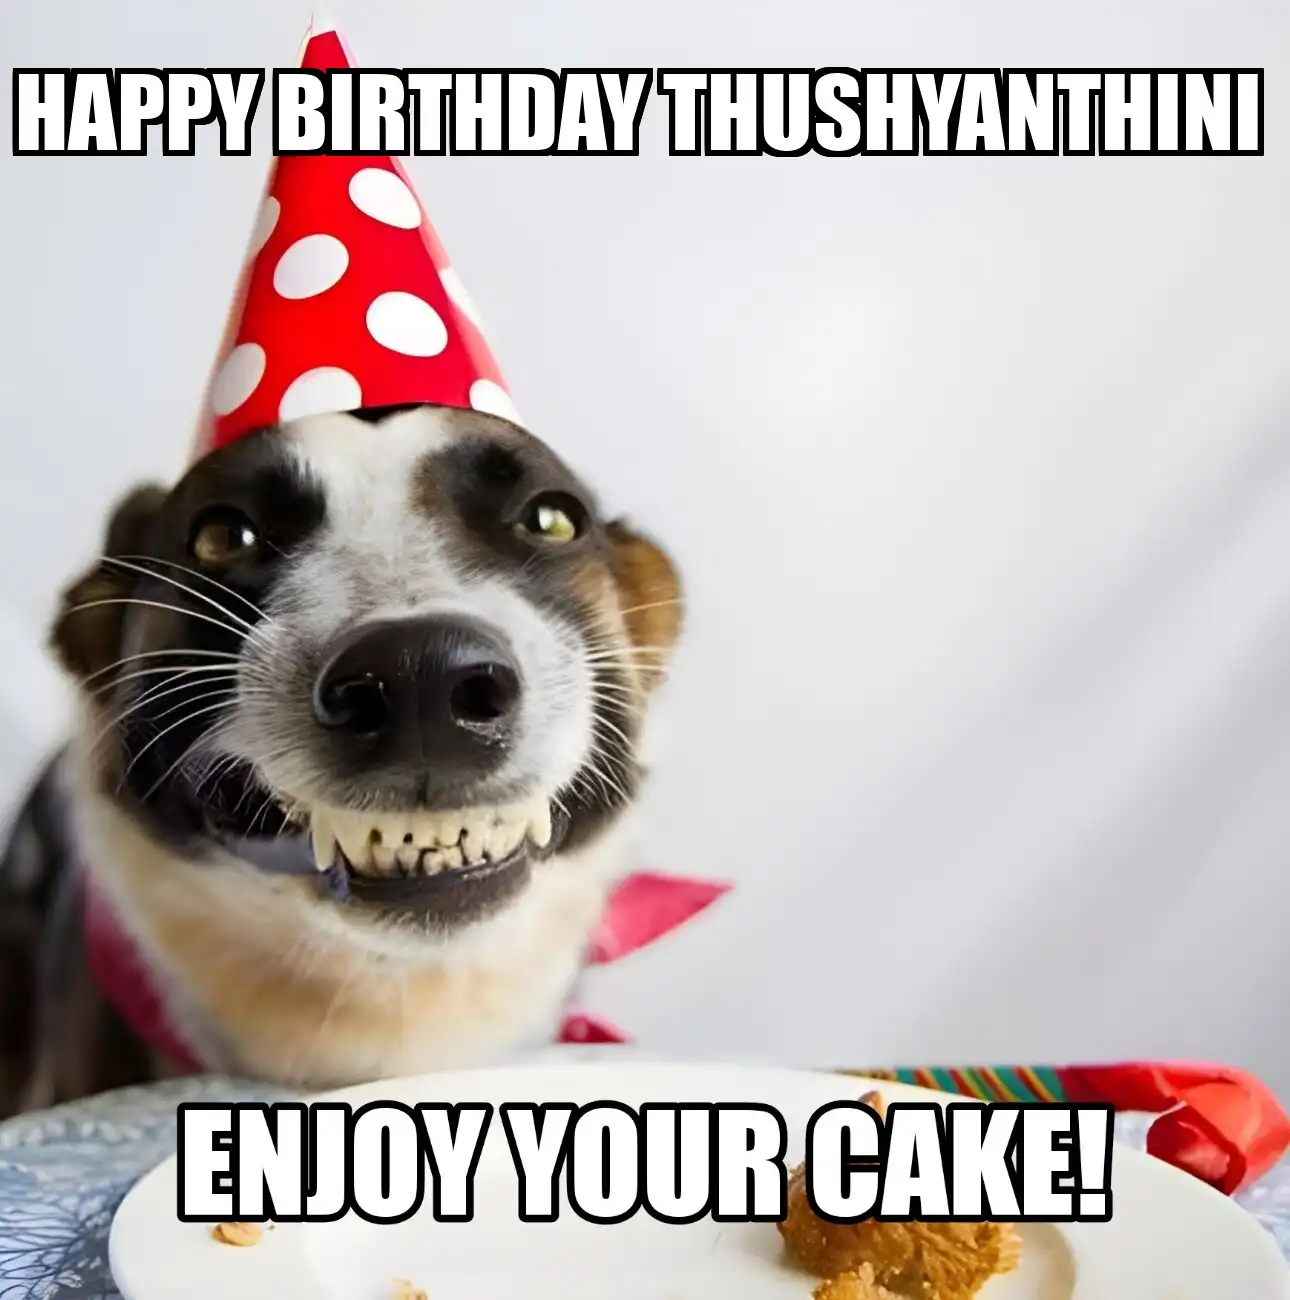 Happy Birthday Thushyanthini Enjoy Your Cake Dog Meme